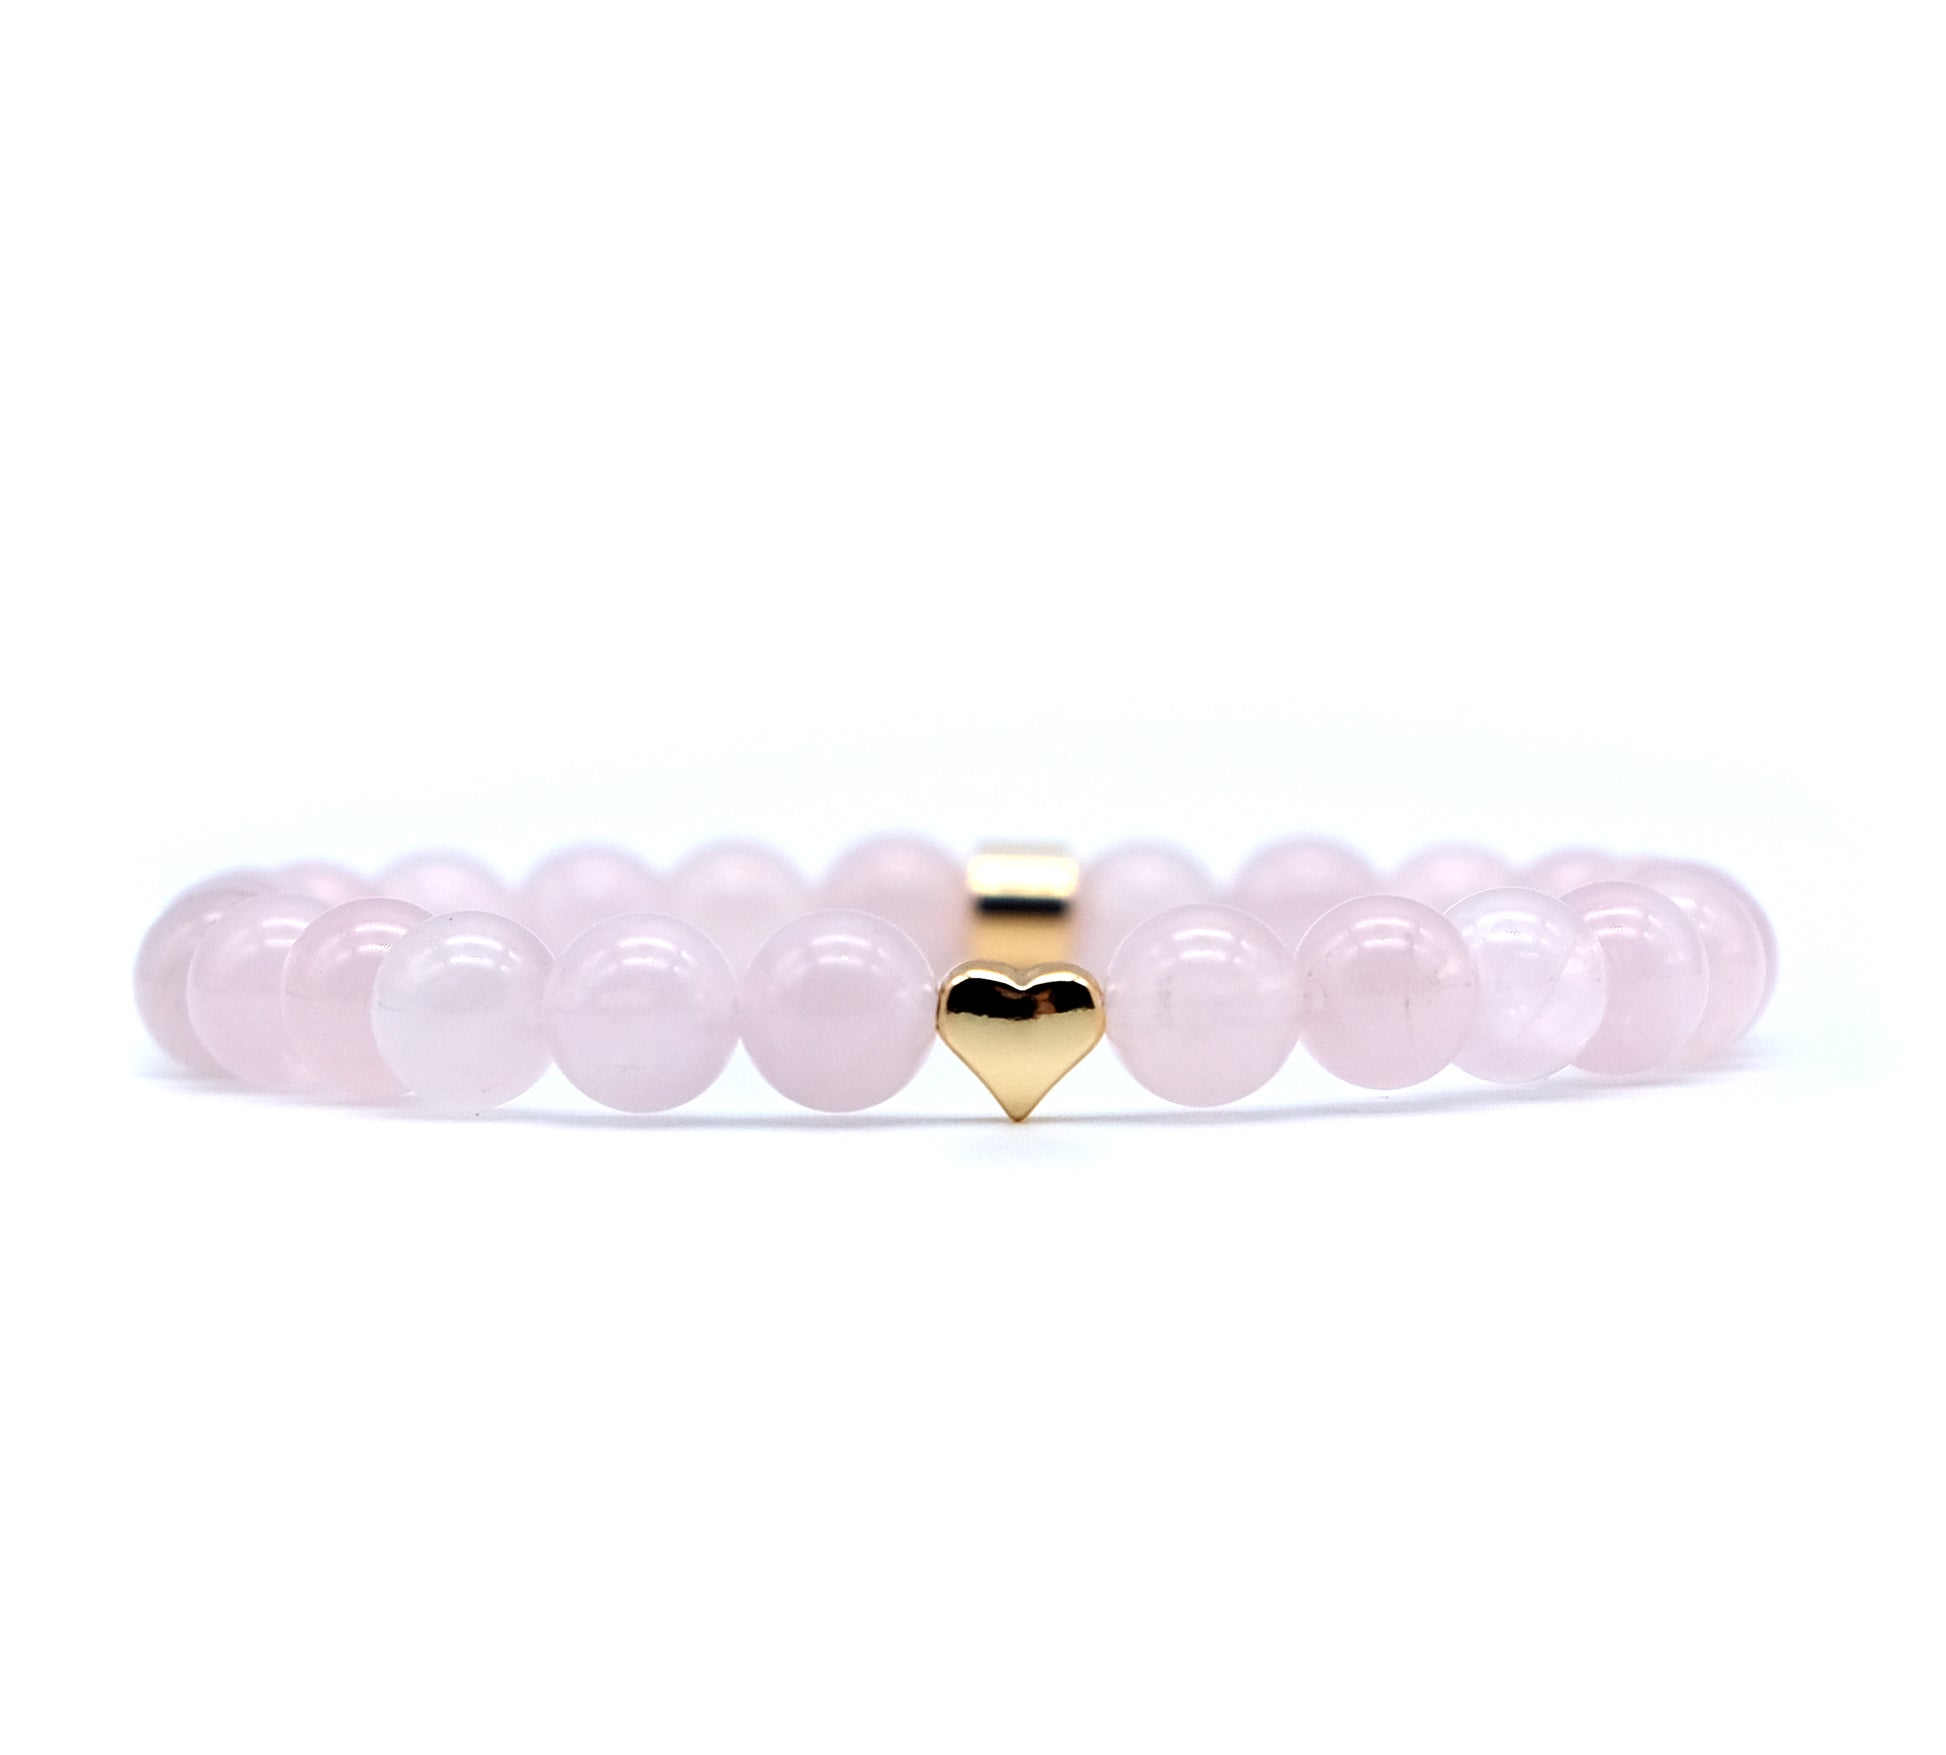 A rose quartz gemstone bracelet with gold love heart